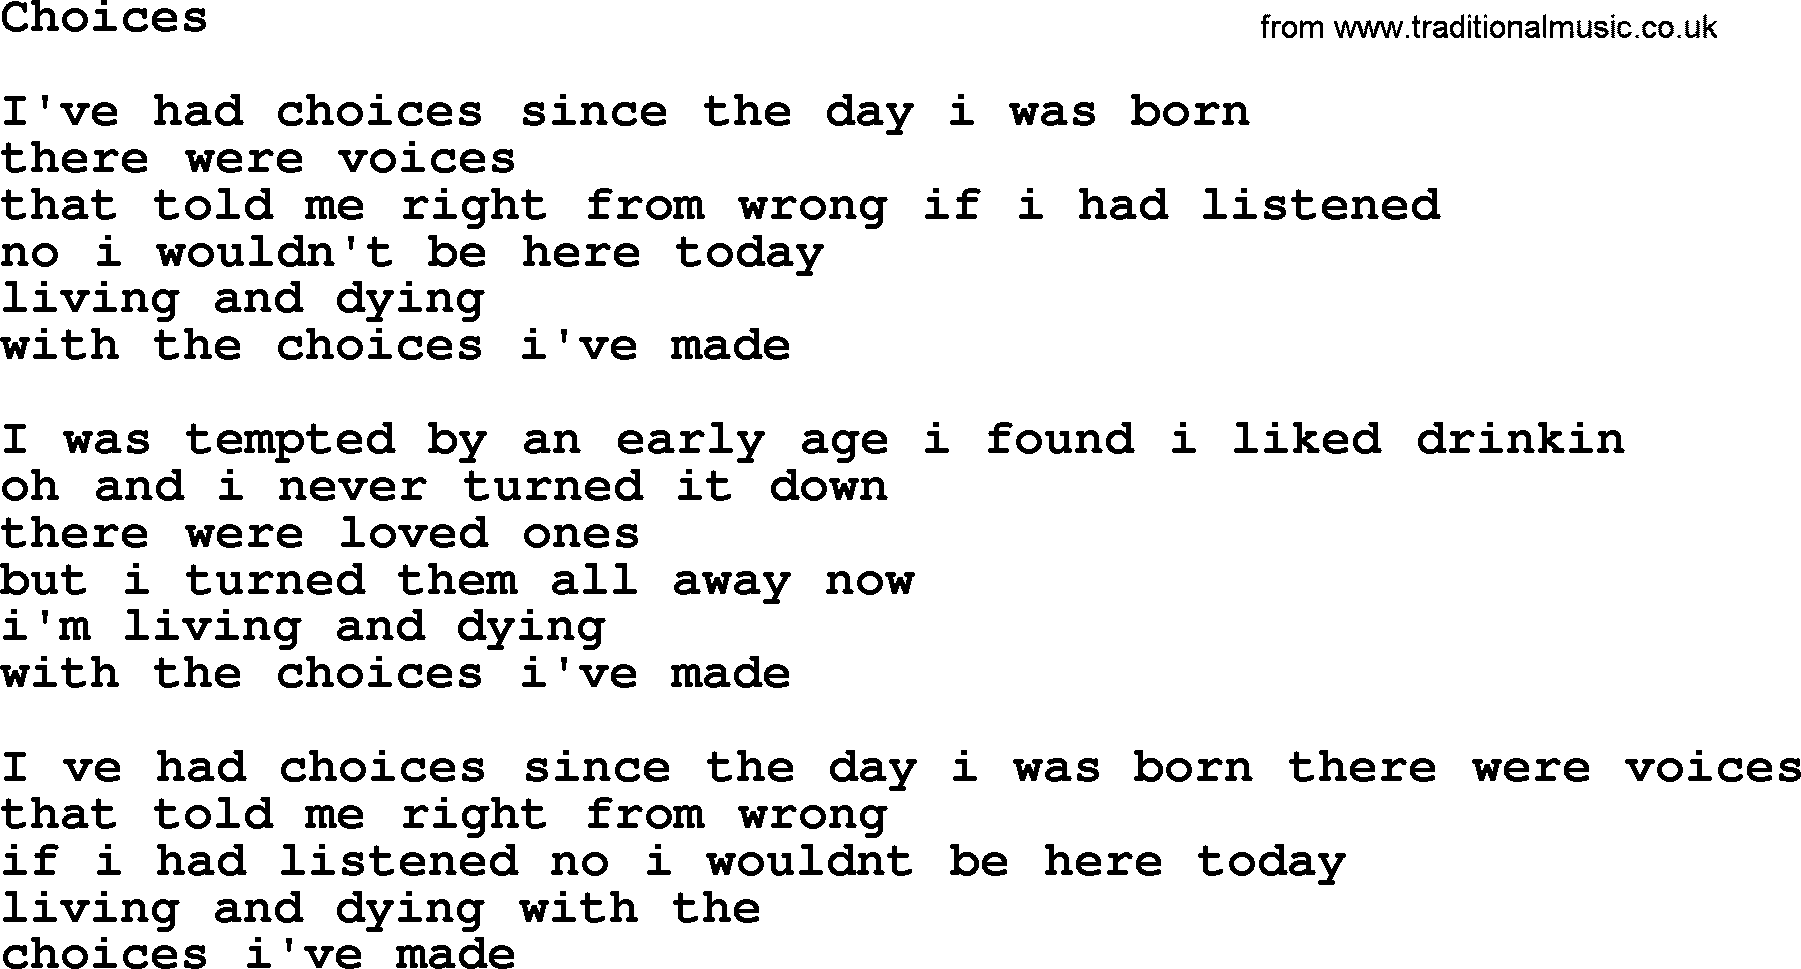 George Jones song: Choices, lyrics